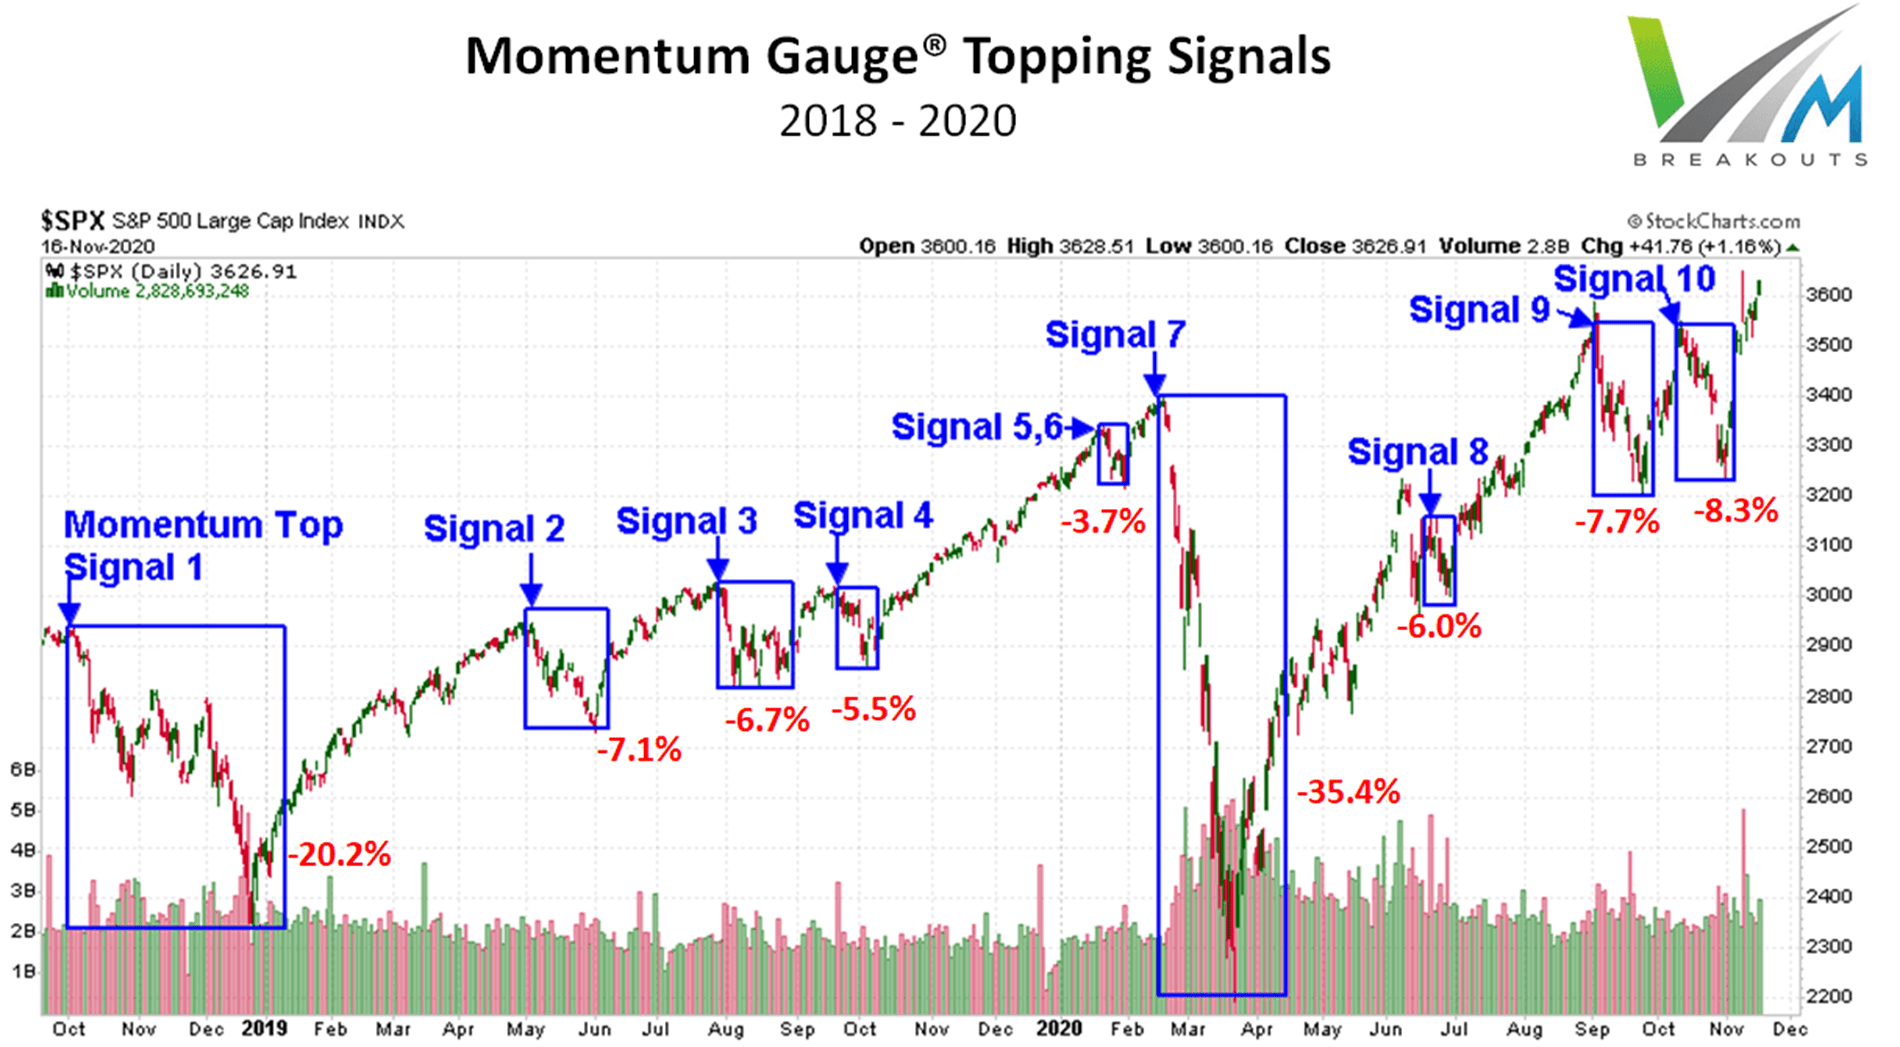 2018 - 2020 Momentum Gauge topping signals